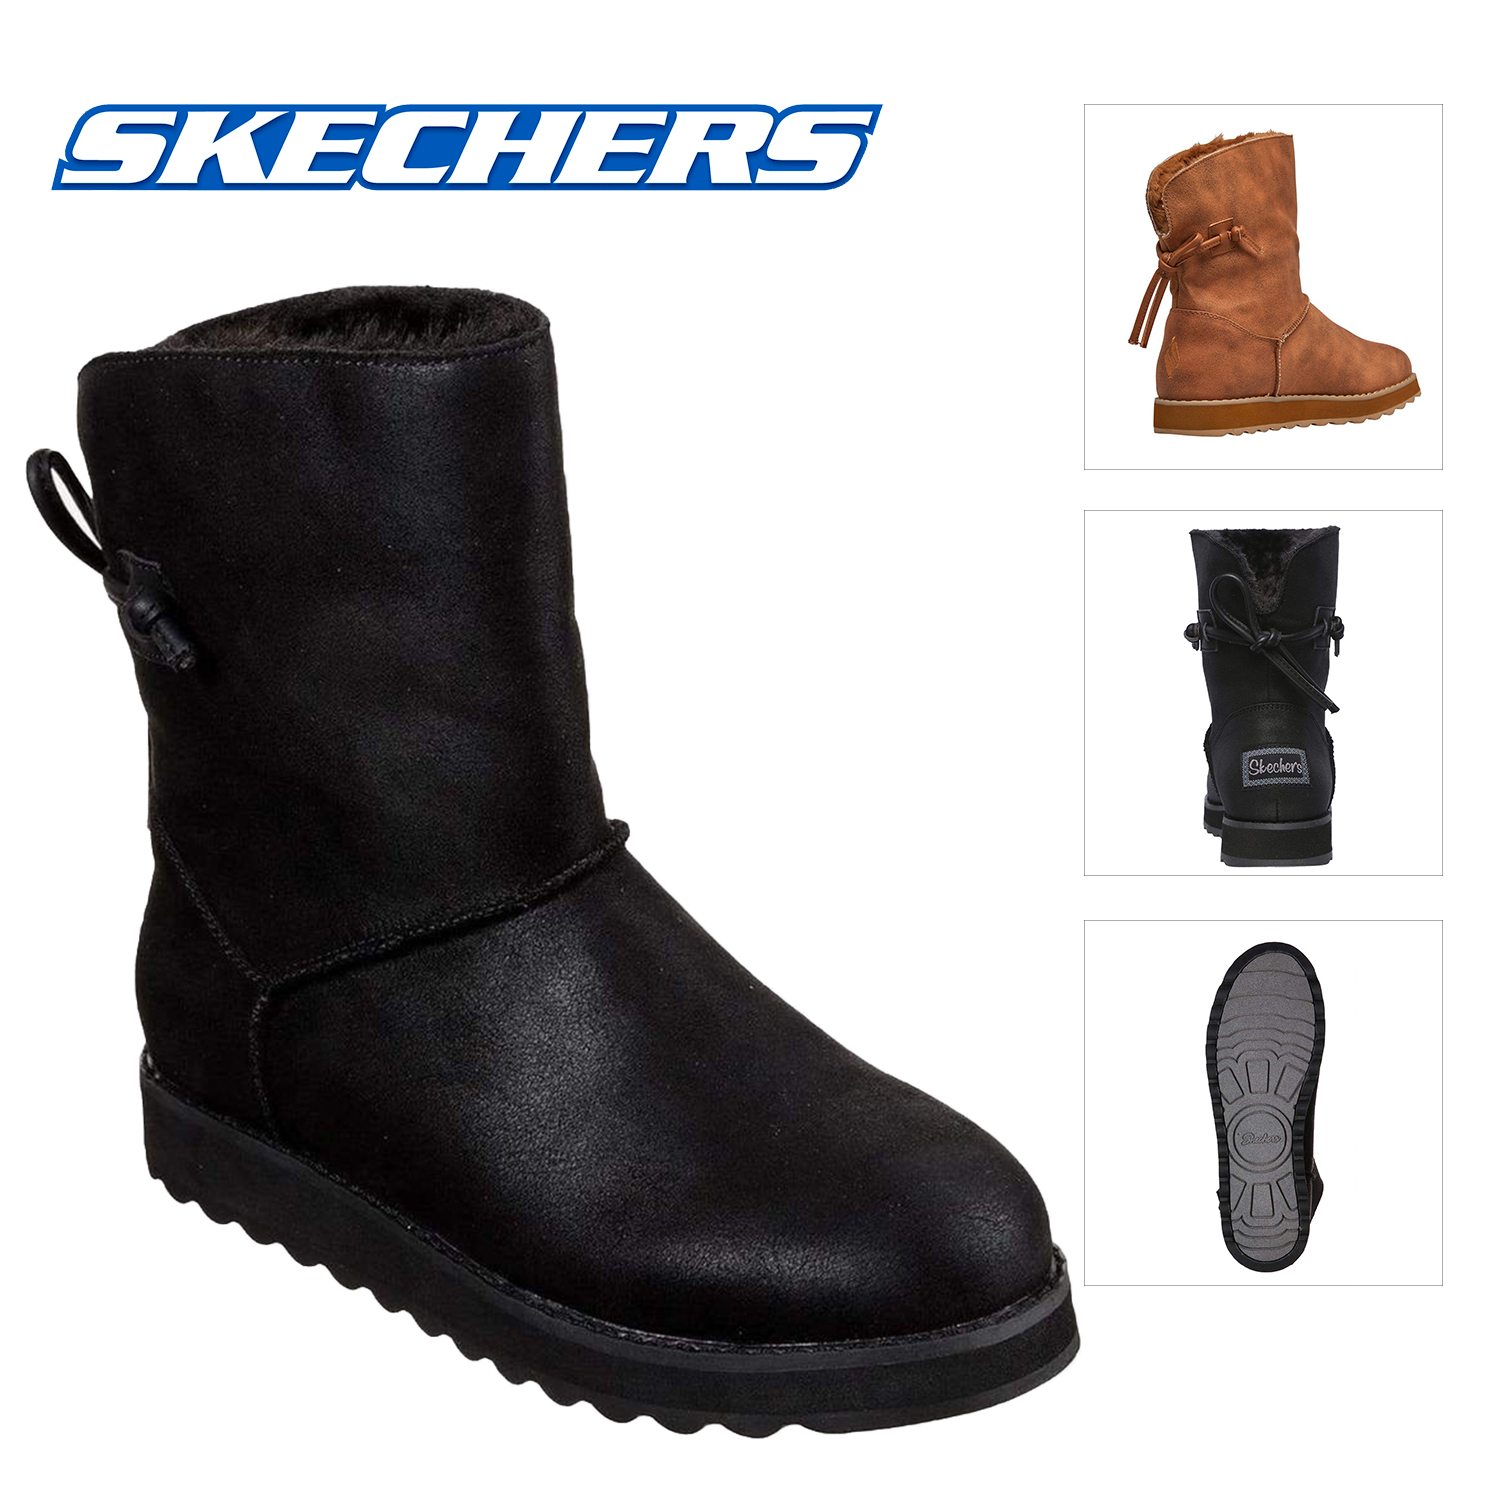 skechers women's keepsakes mid shaft boots